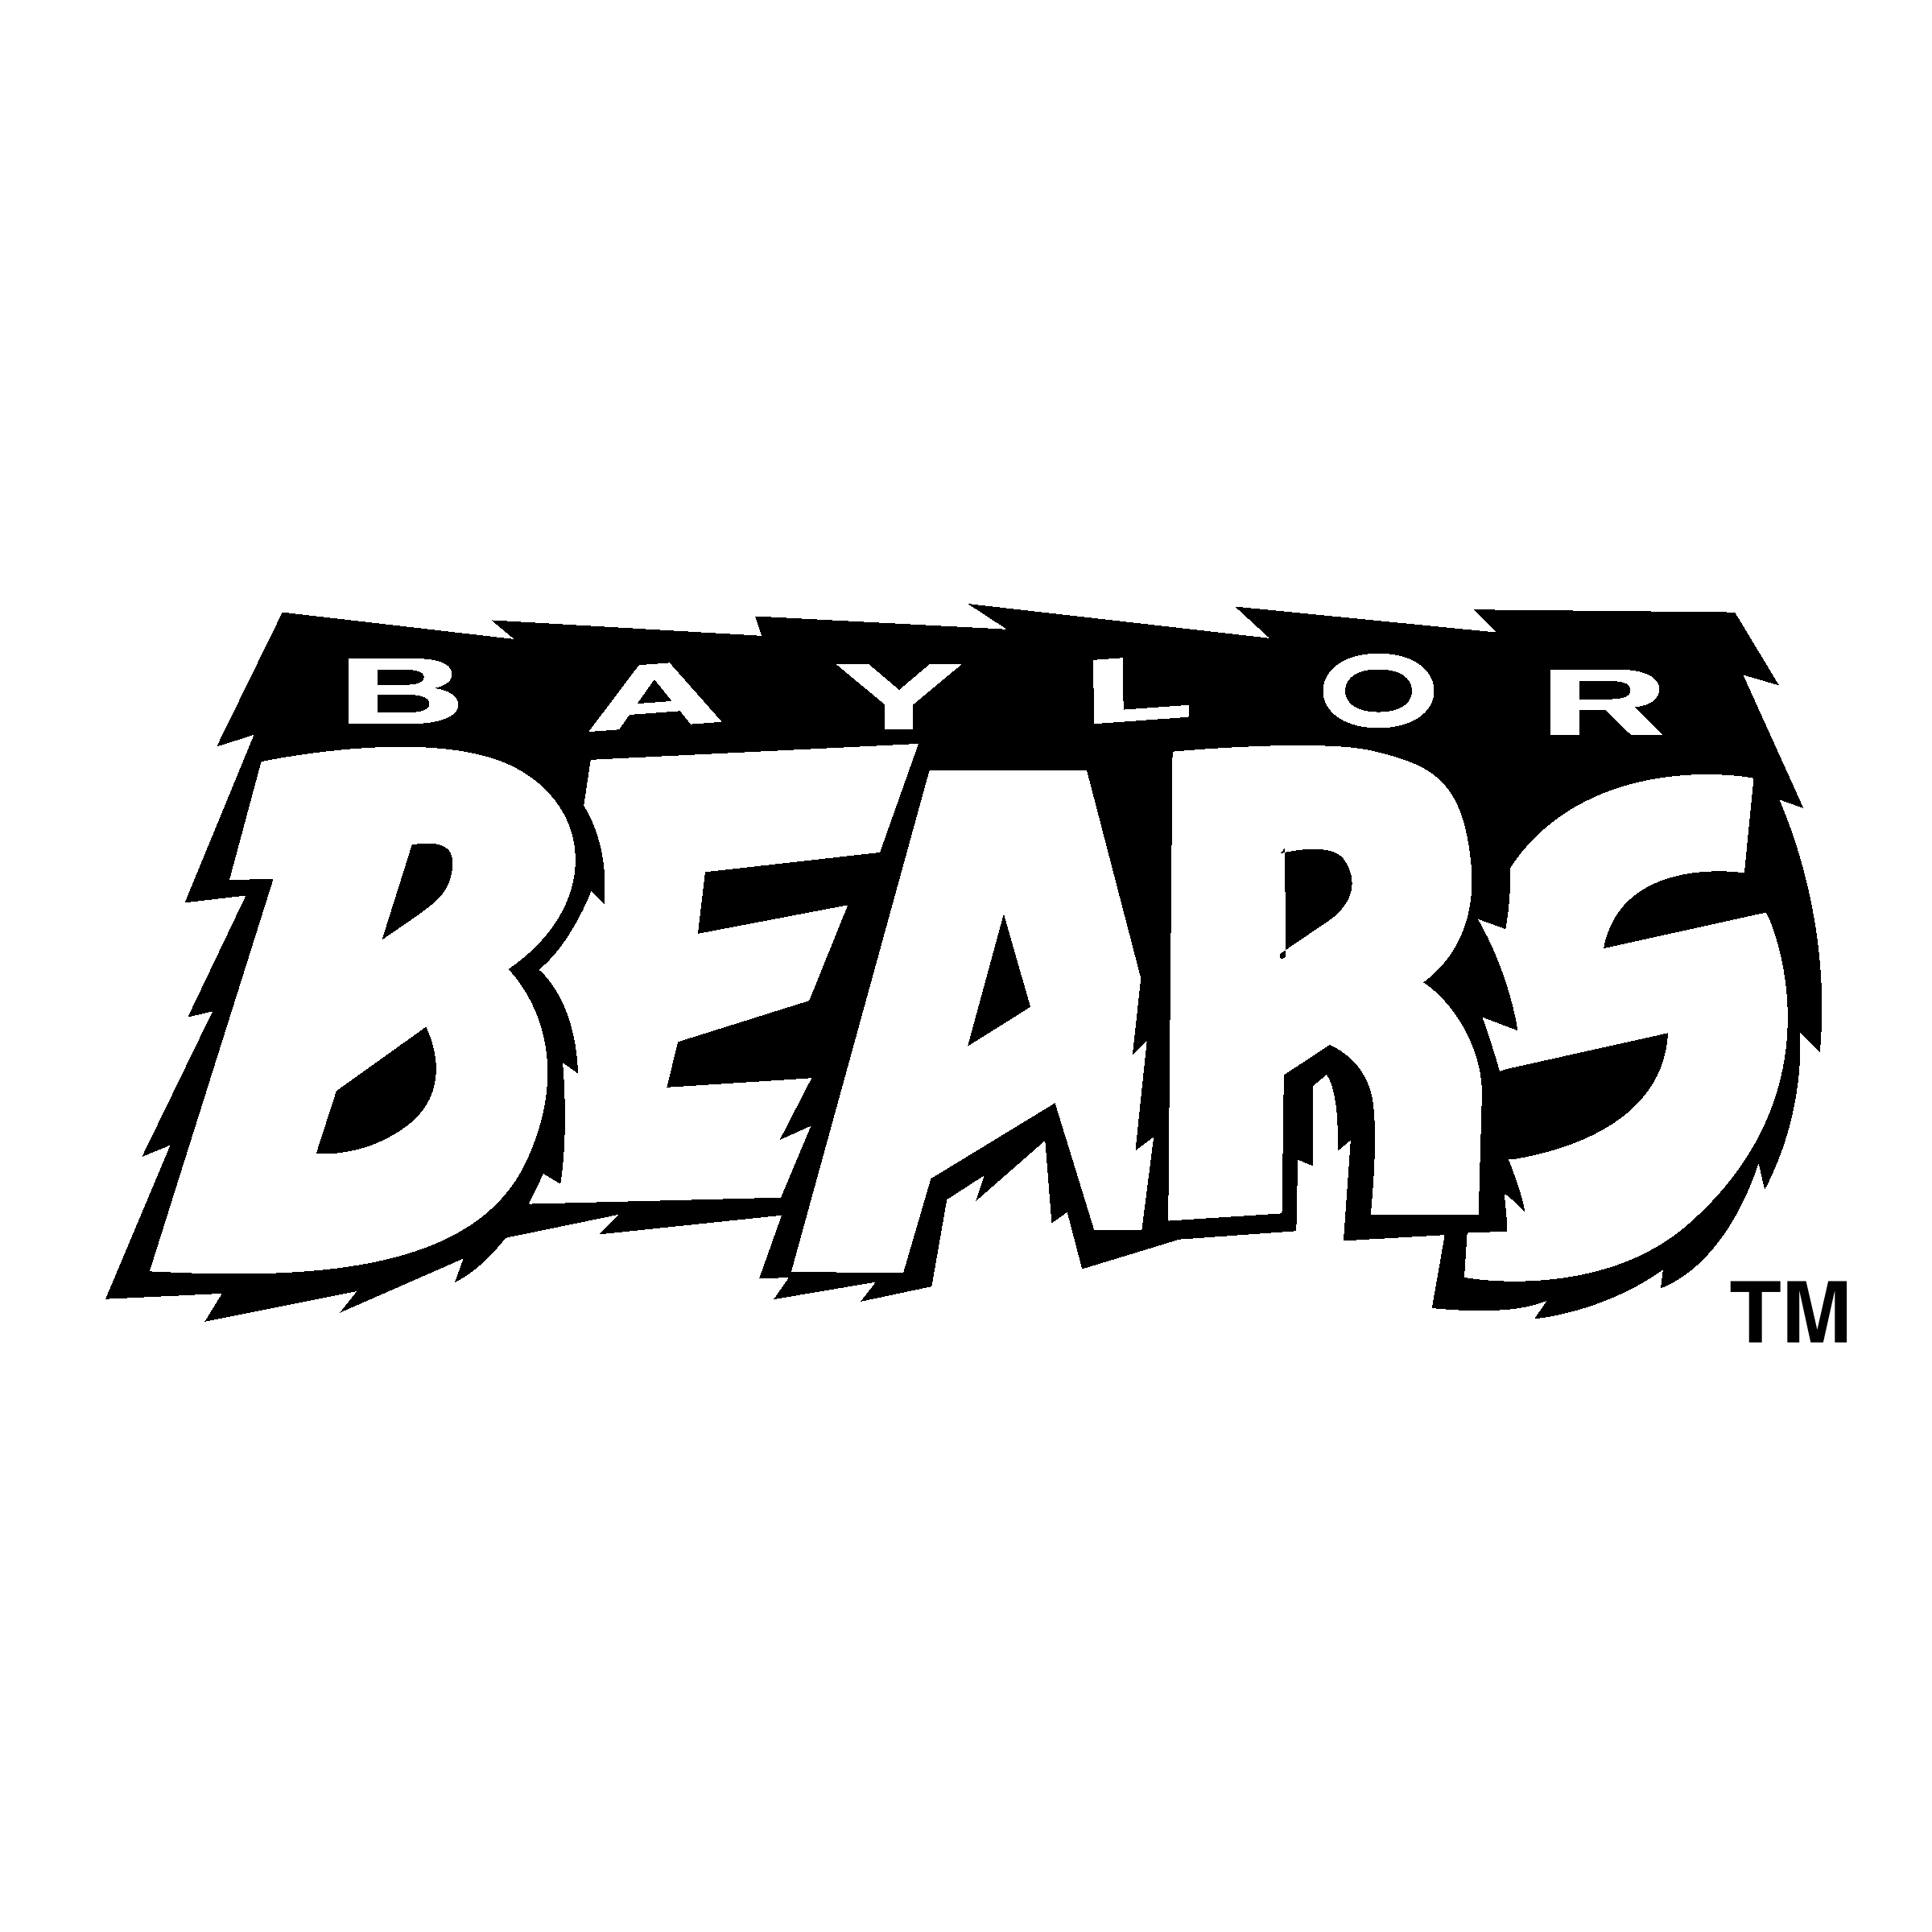 Black and White Bears Logo - Baylor Bears Logo PNG Transparent & SVG Vector - Freebie Supply